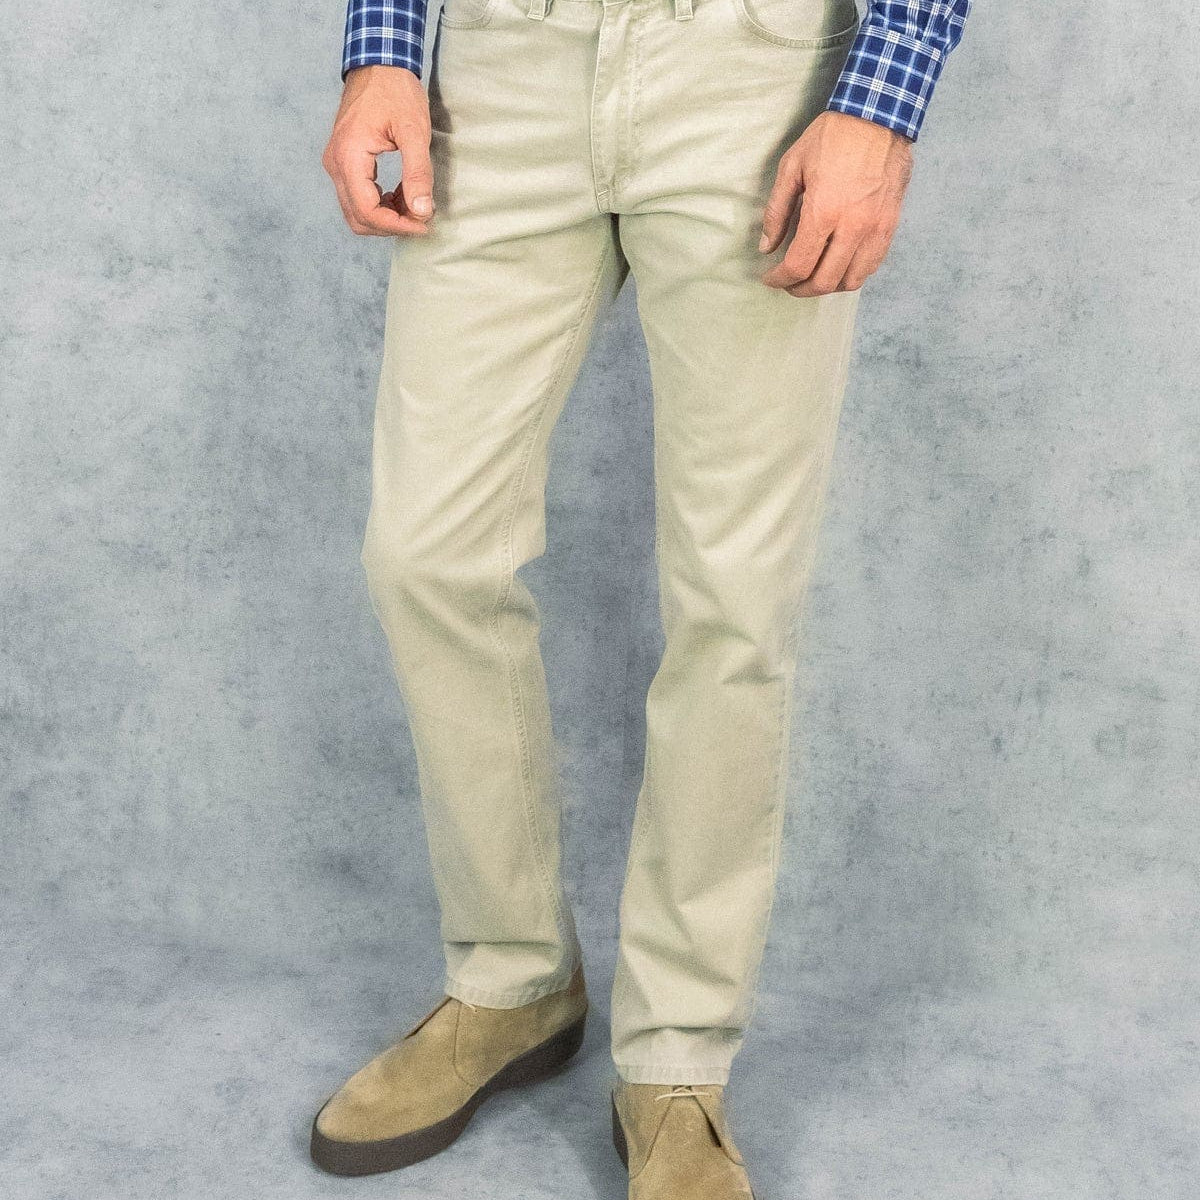 Plain Stone White Cotton Jeans